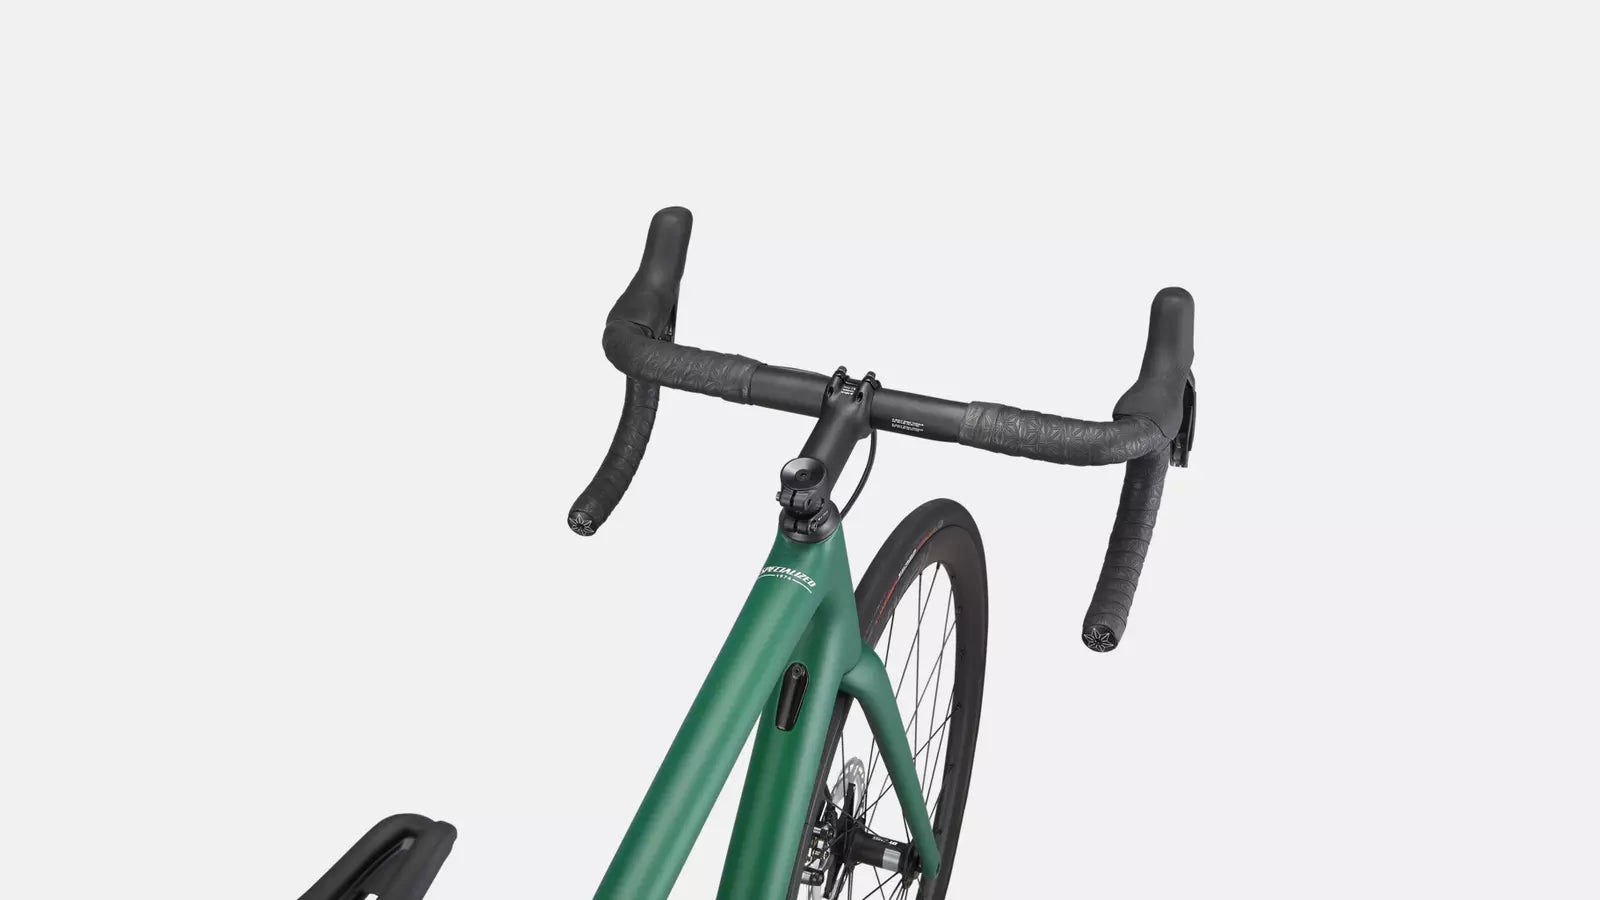 Bicicleta Aethos Expert, Pine Green/White